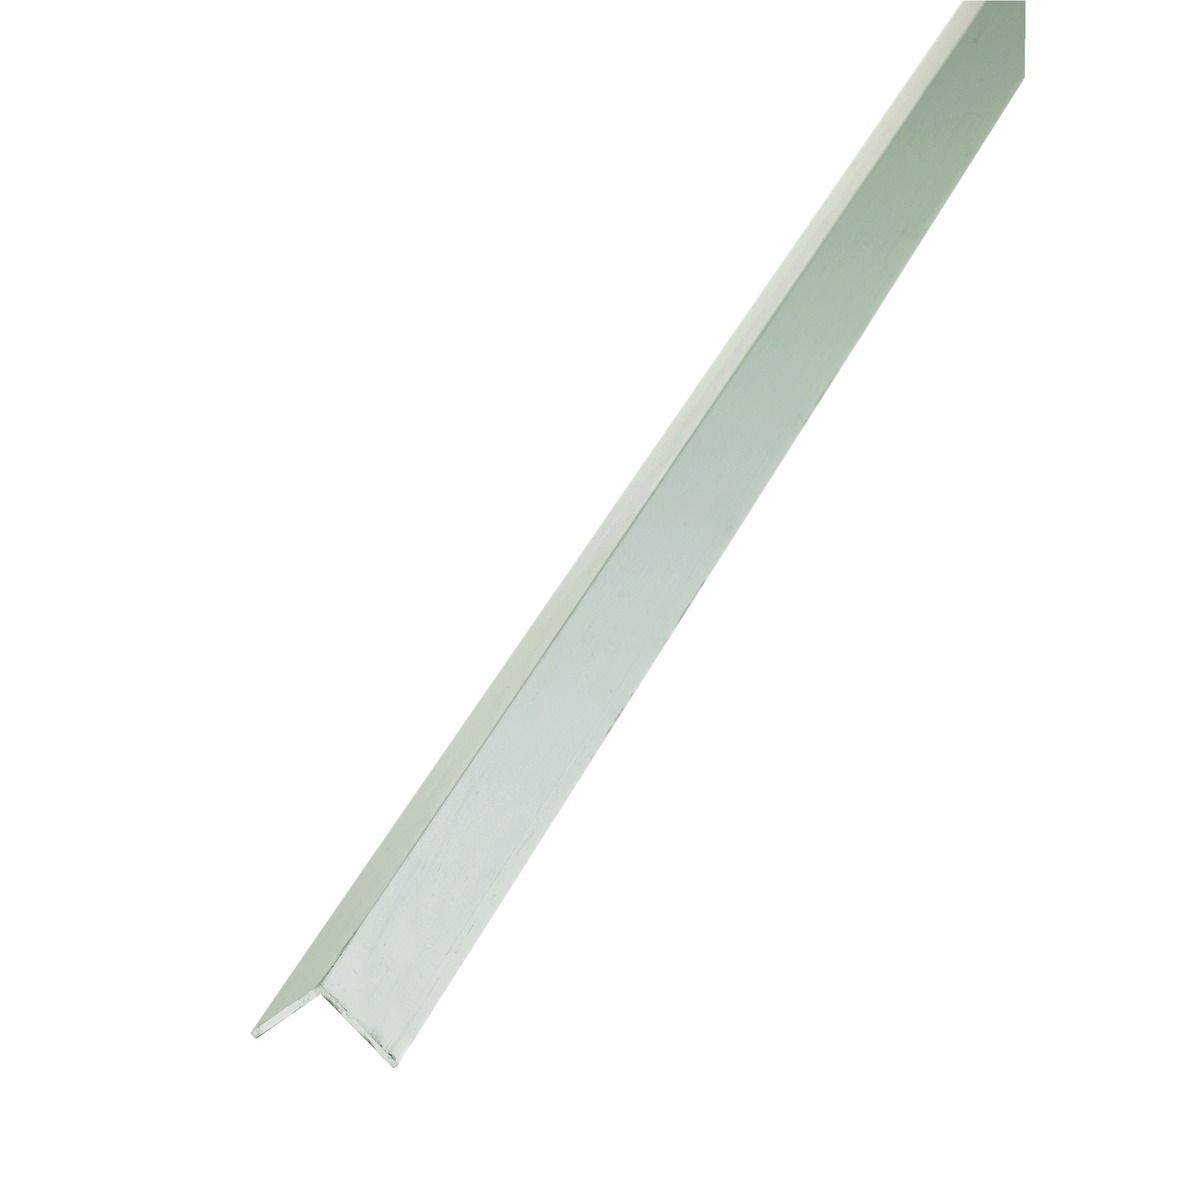 Image of Wickes Angle - Anodised Aluminium 15 x 15mm x 2m